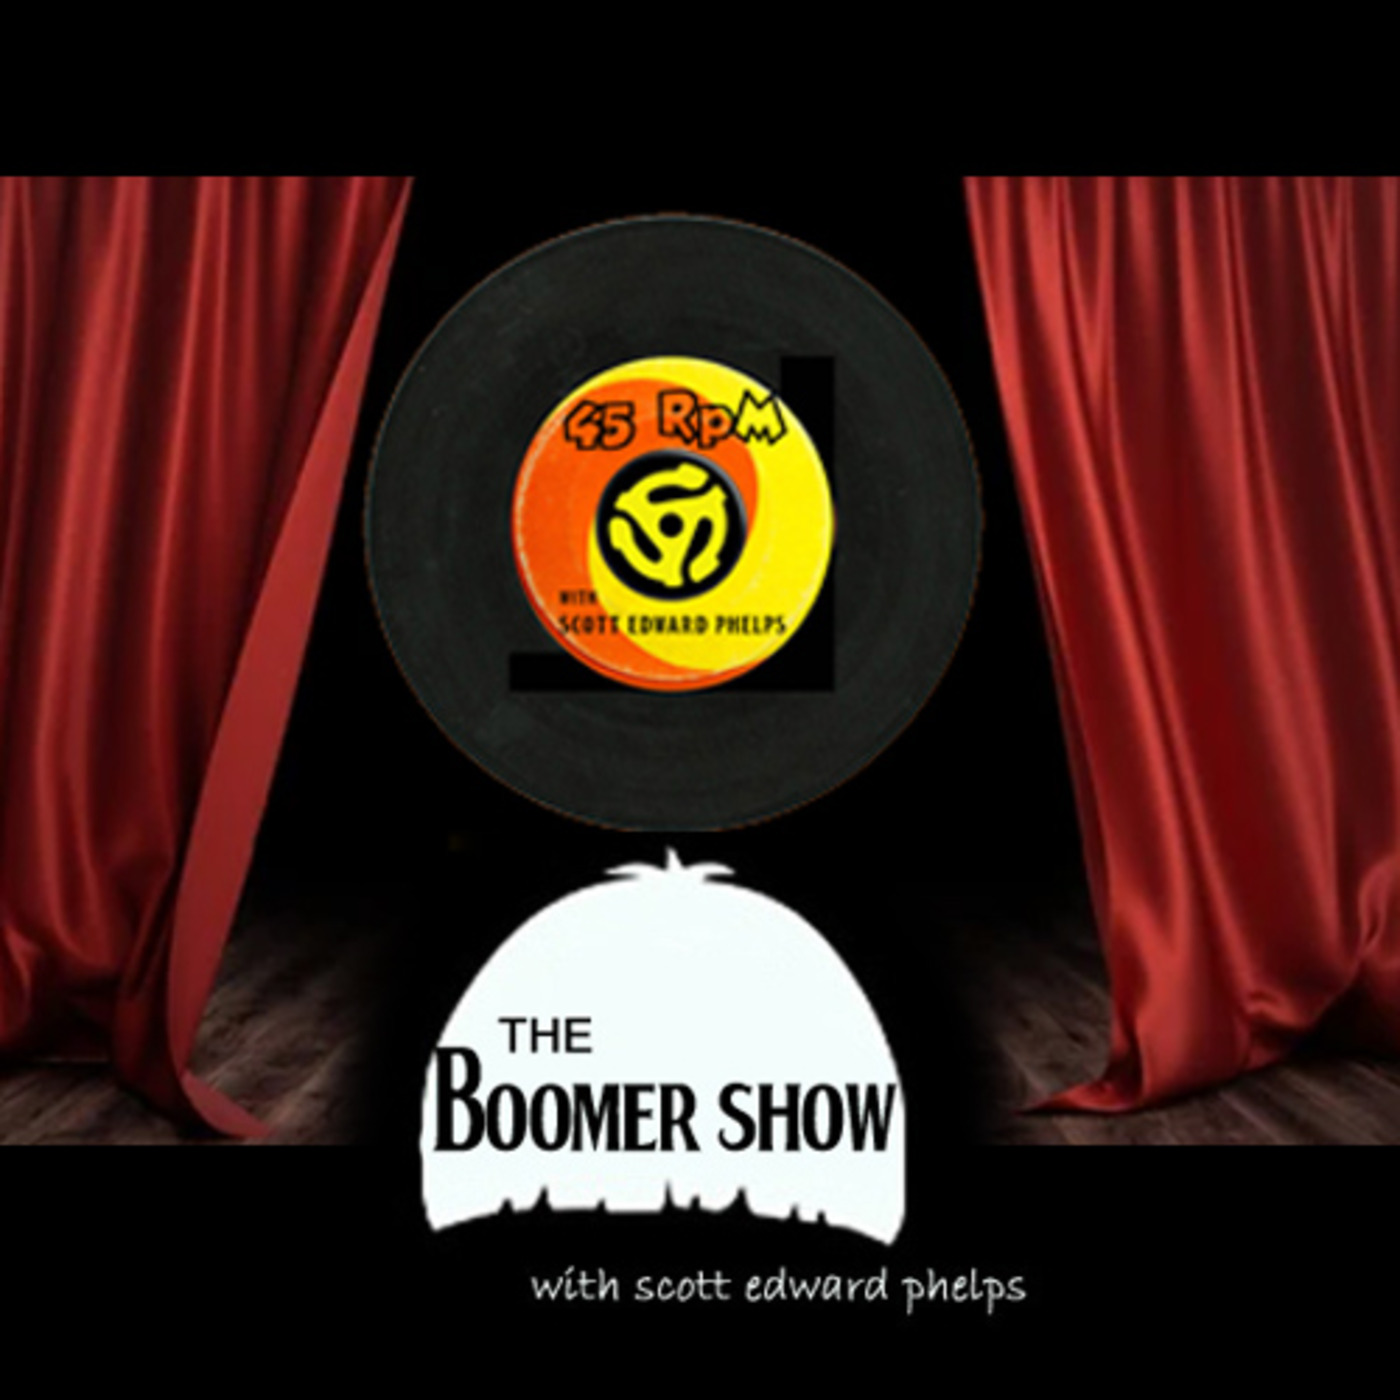 Episode 47: 45 RPM Presents THE BOOMER SHOW Episode Three